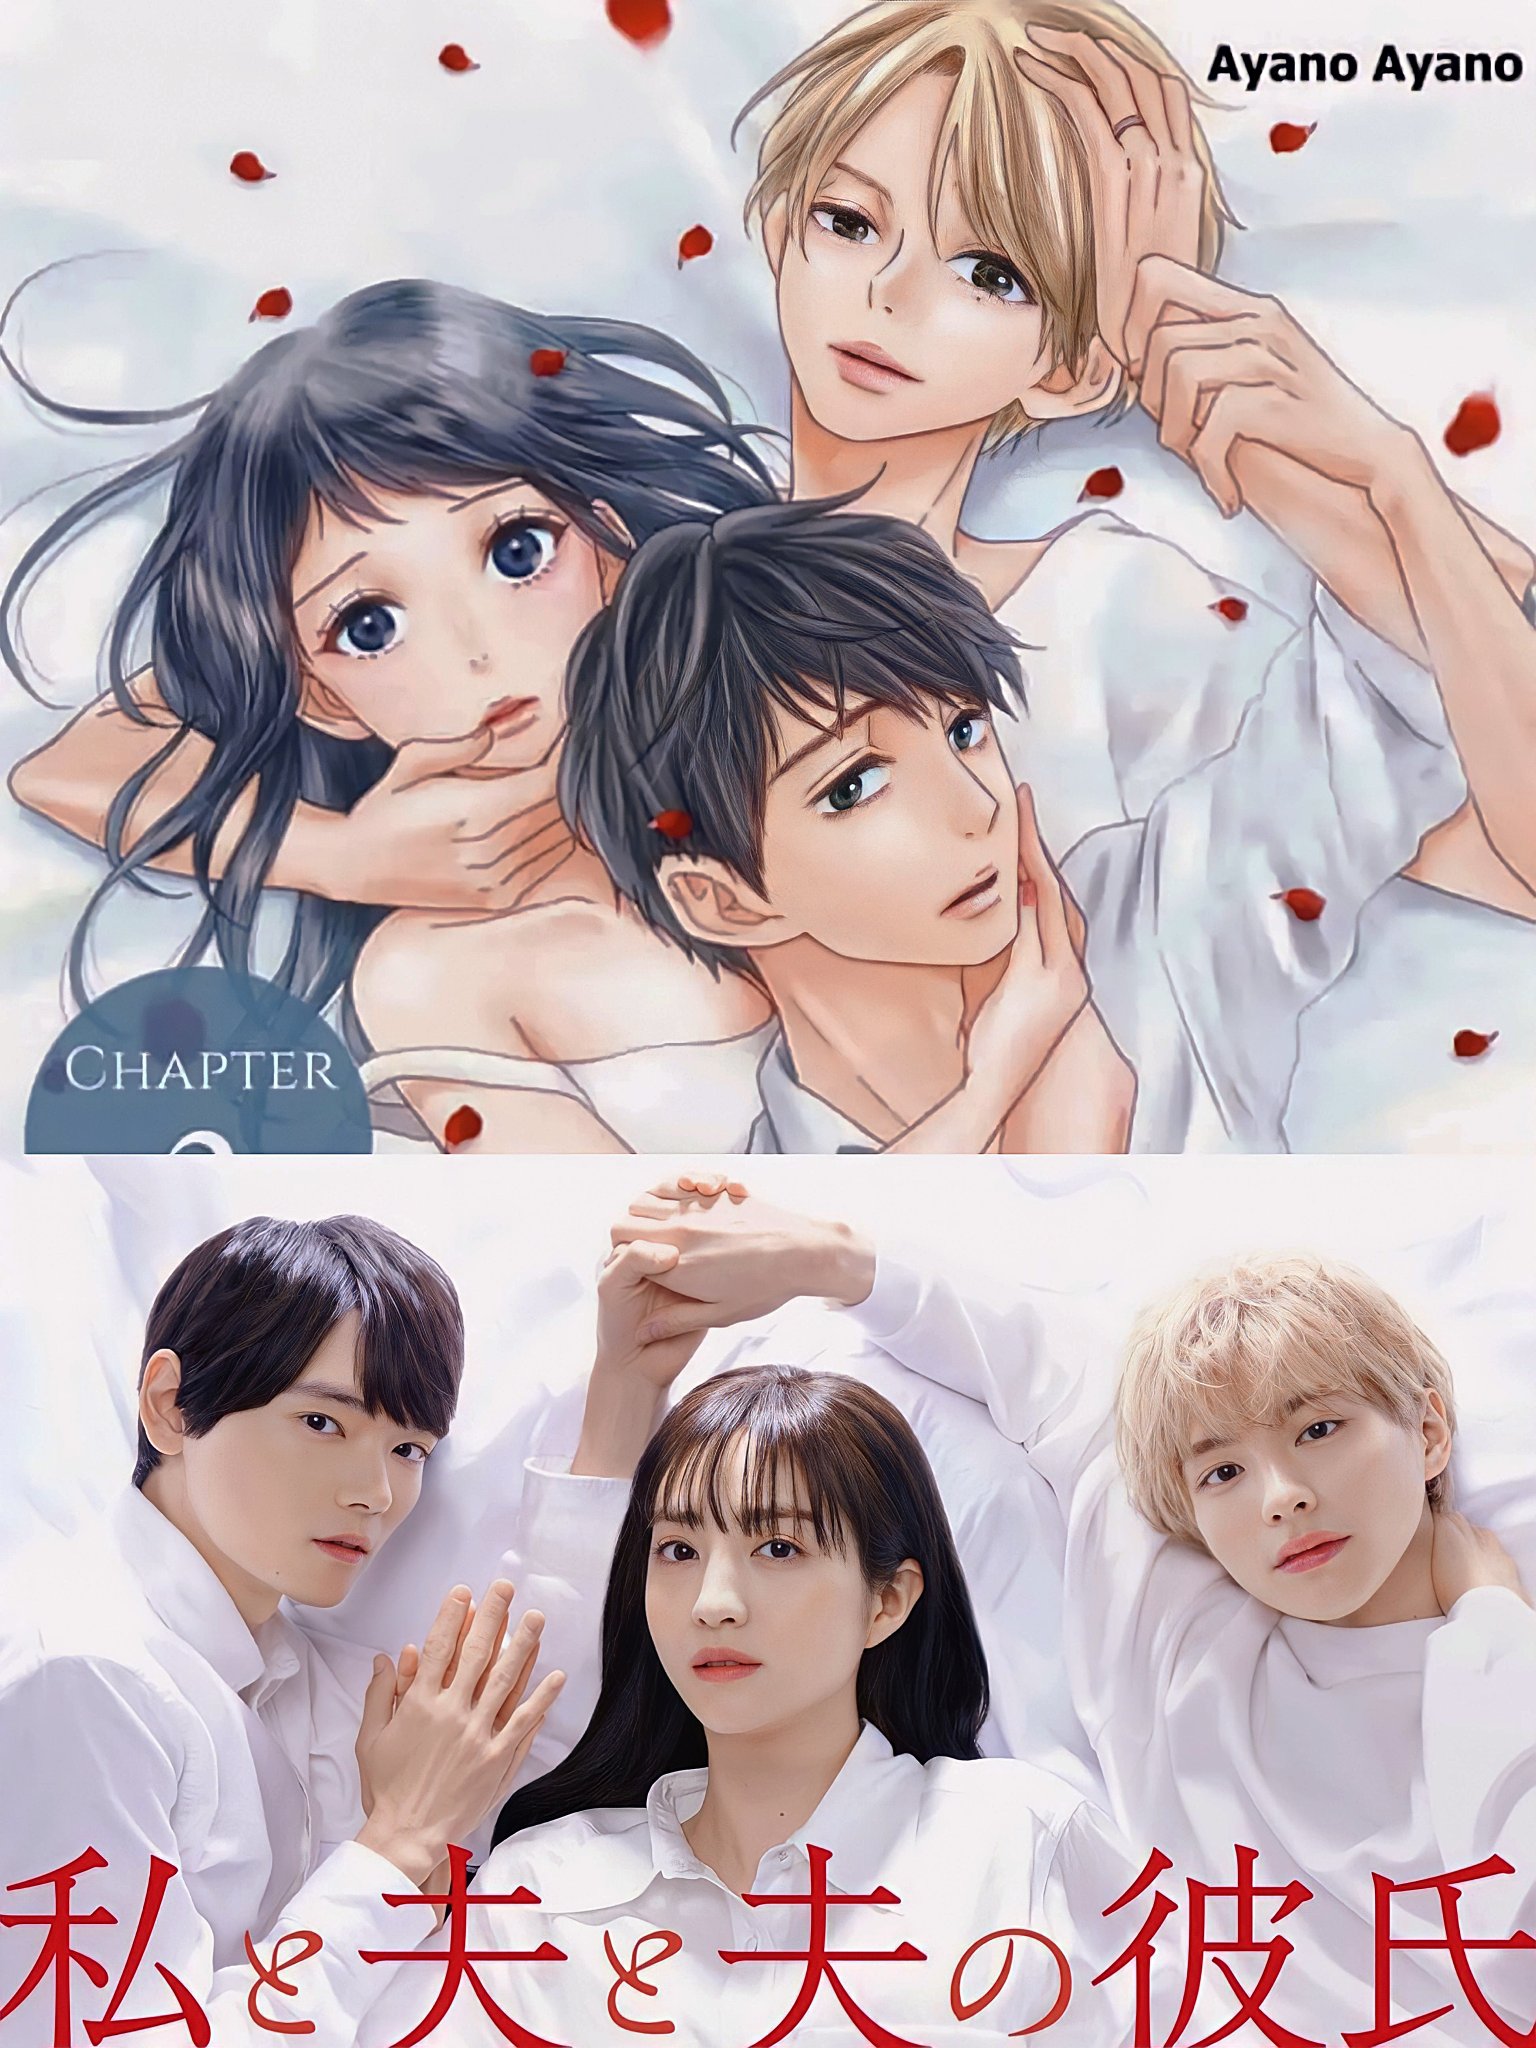 Yuki  Netflix's YYH, OP S2 and AIB S3 on X: Netflix live adaptation of  'Kimi ni Todoke' manga series reveals worldwide release on March 30, 2023.  🤩🔥  / X